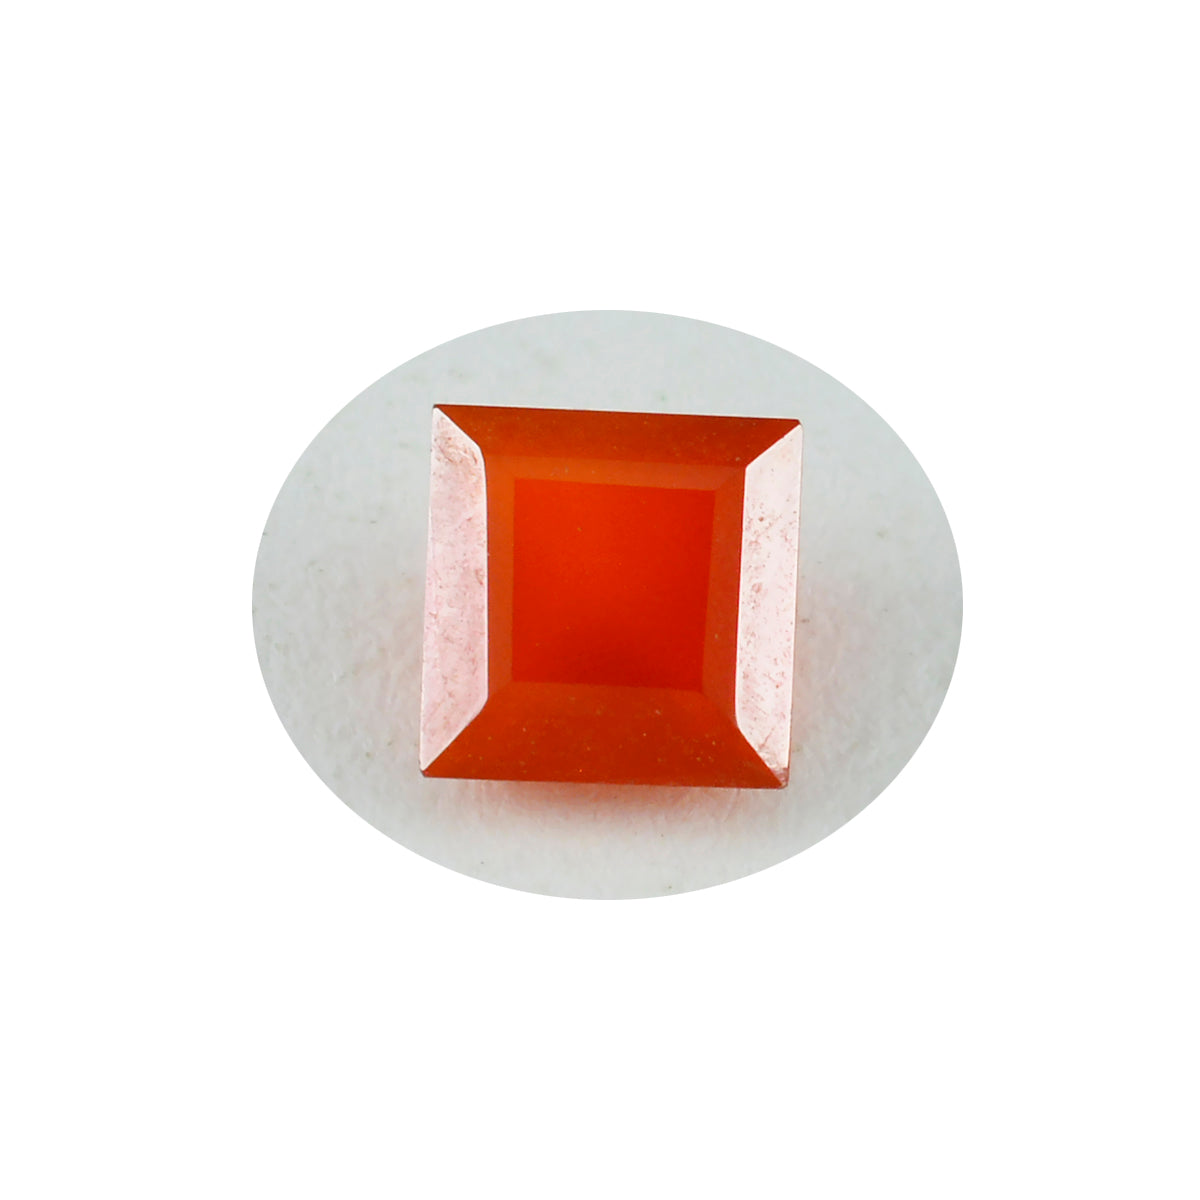 riyogems 1 st äkta röd onyx fasetterad 10x10 mm fyrkantig form stilig kvalitet lös sten